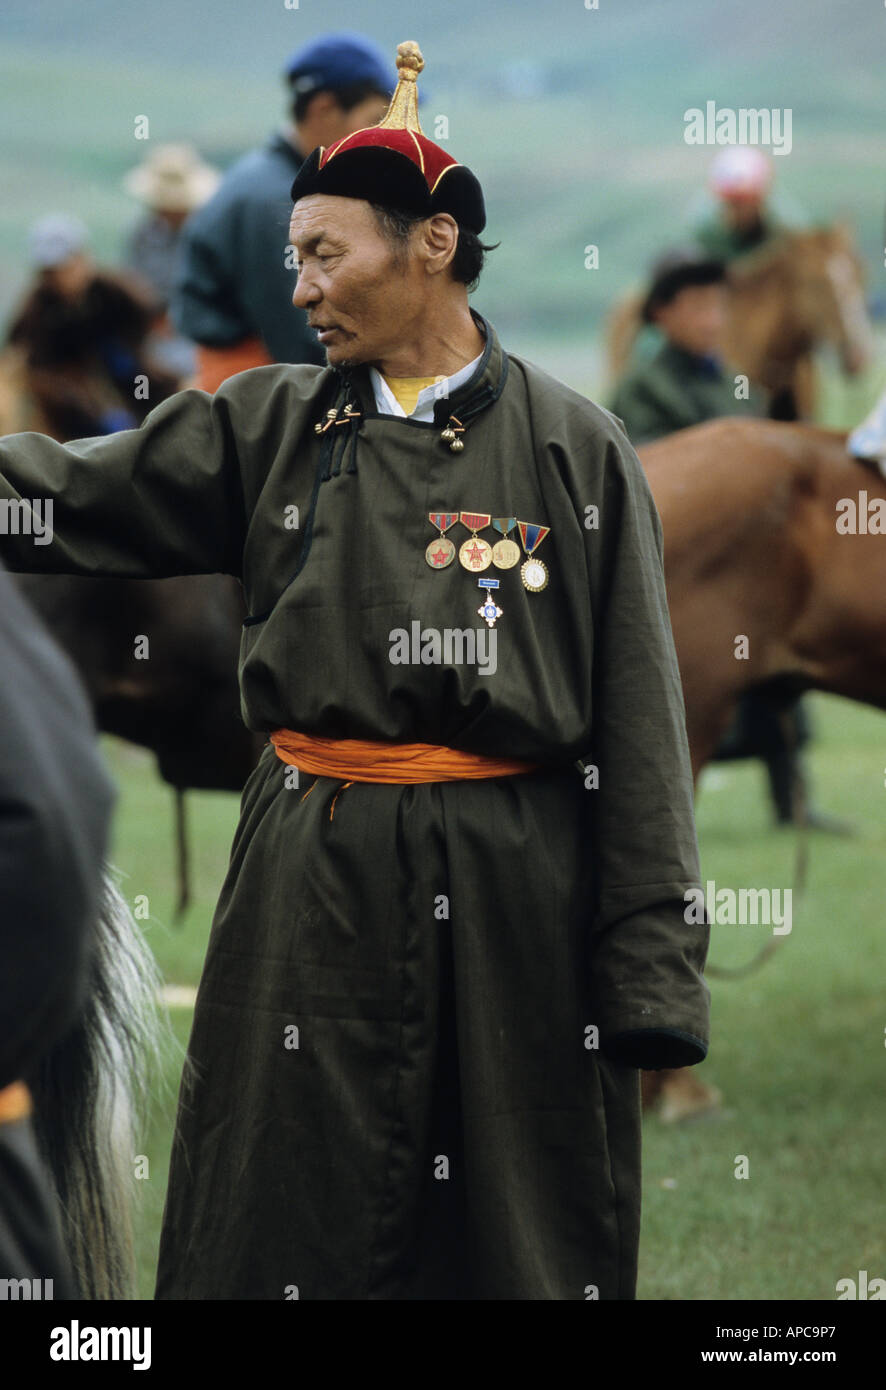 man with medals khar khorin Stock Photo